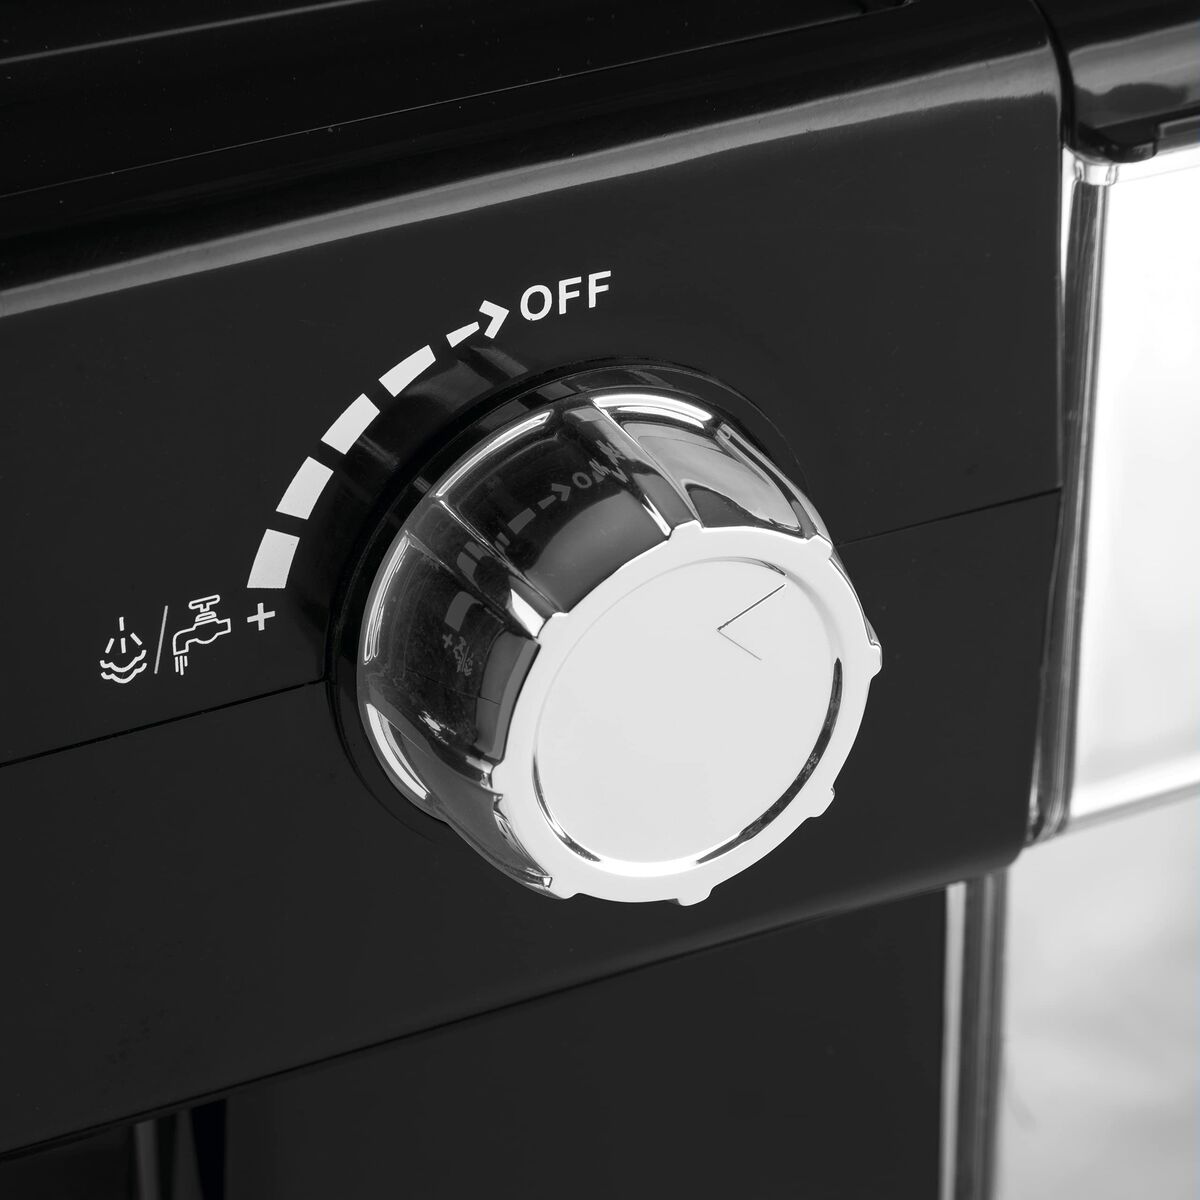 Express Manual Coffee Machine UFESA CE7244 1,5 L Black Silver 850 W